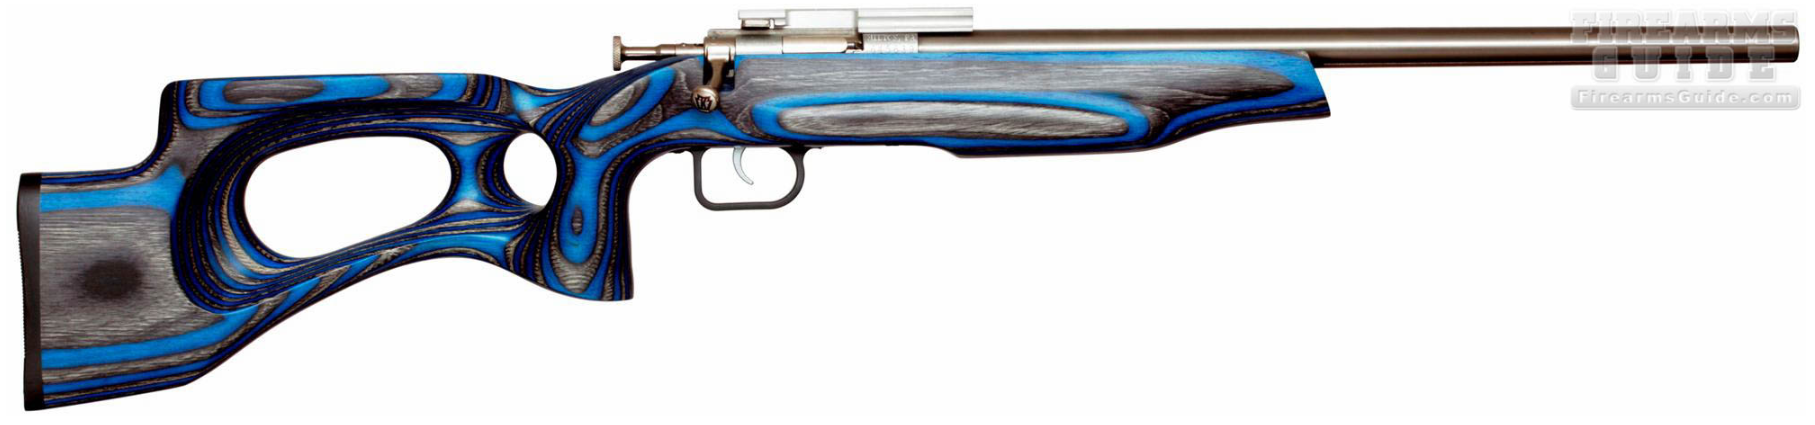 KSA Crickett 22LR Target Rifle